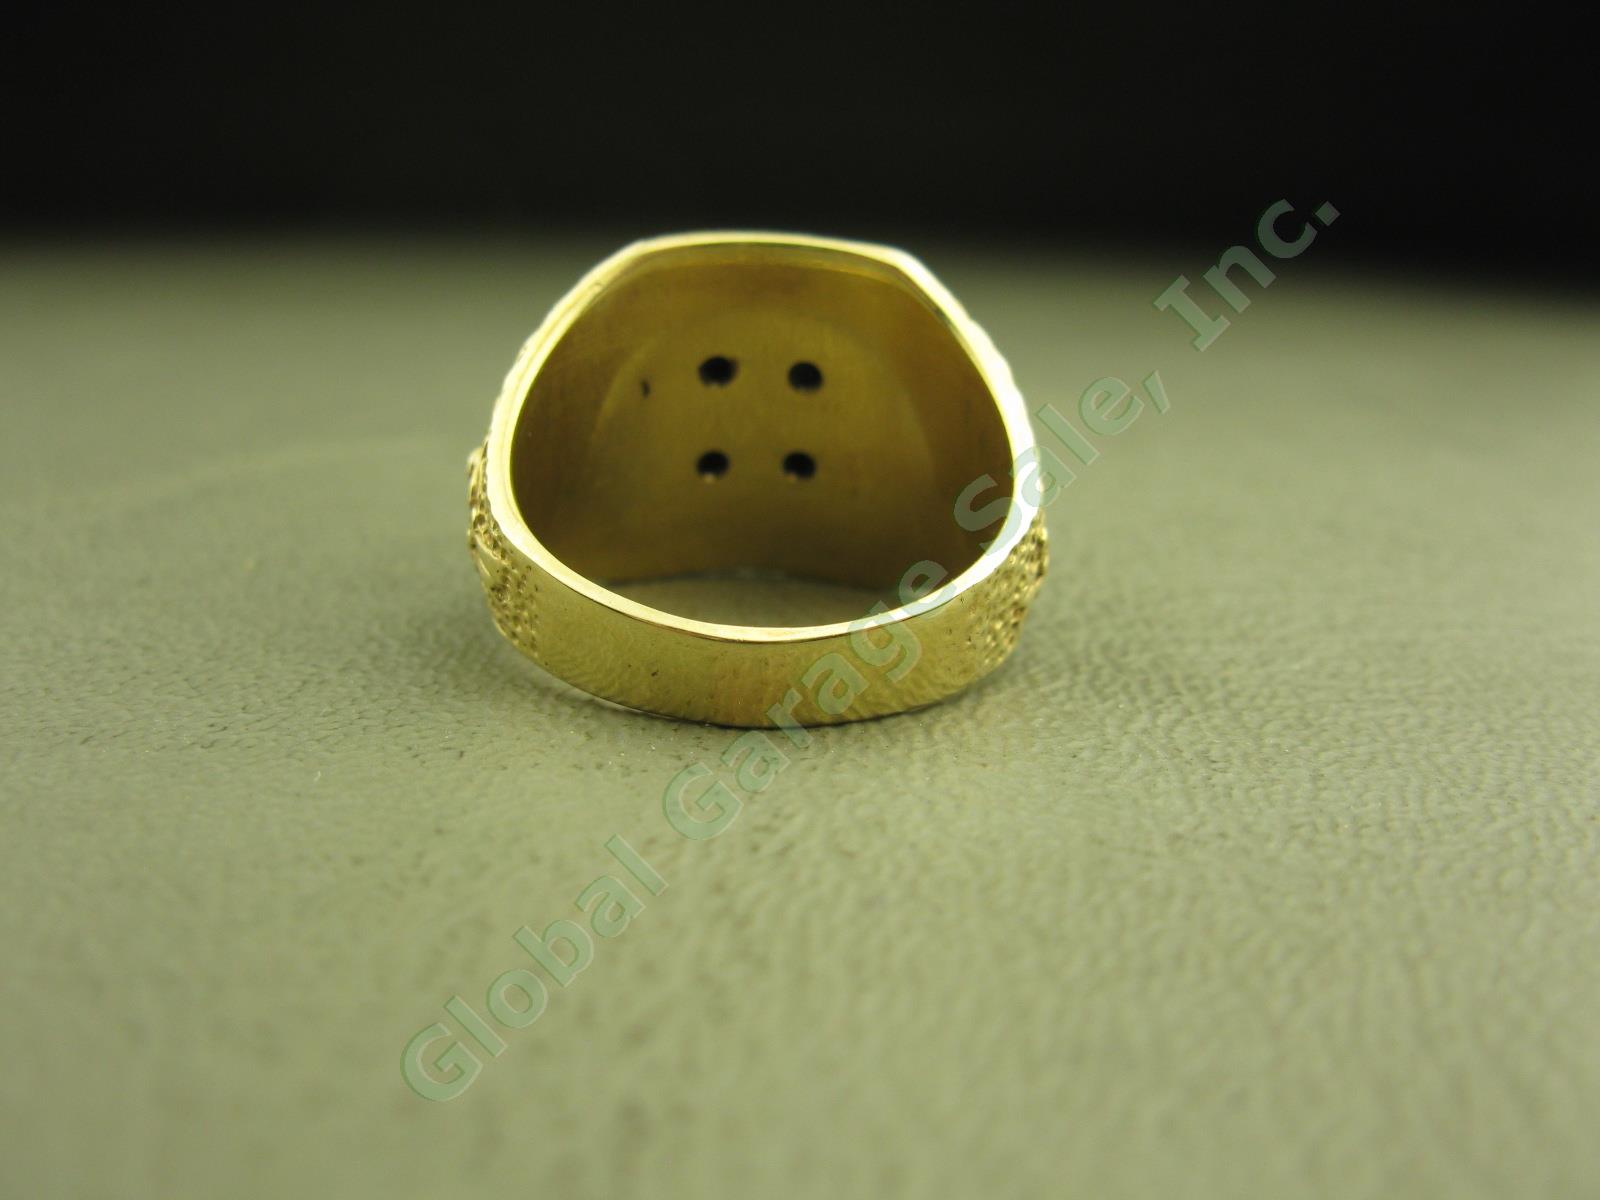 Snap-On Tools Dealer Sales Award 10K Gold Ring W/9 Diamonds 13.8 Gram Size 10.75 3